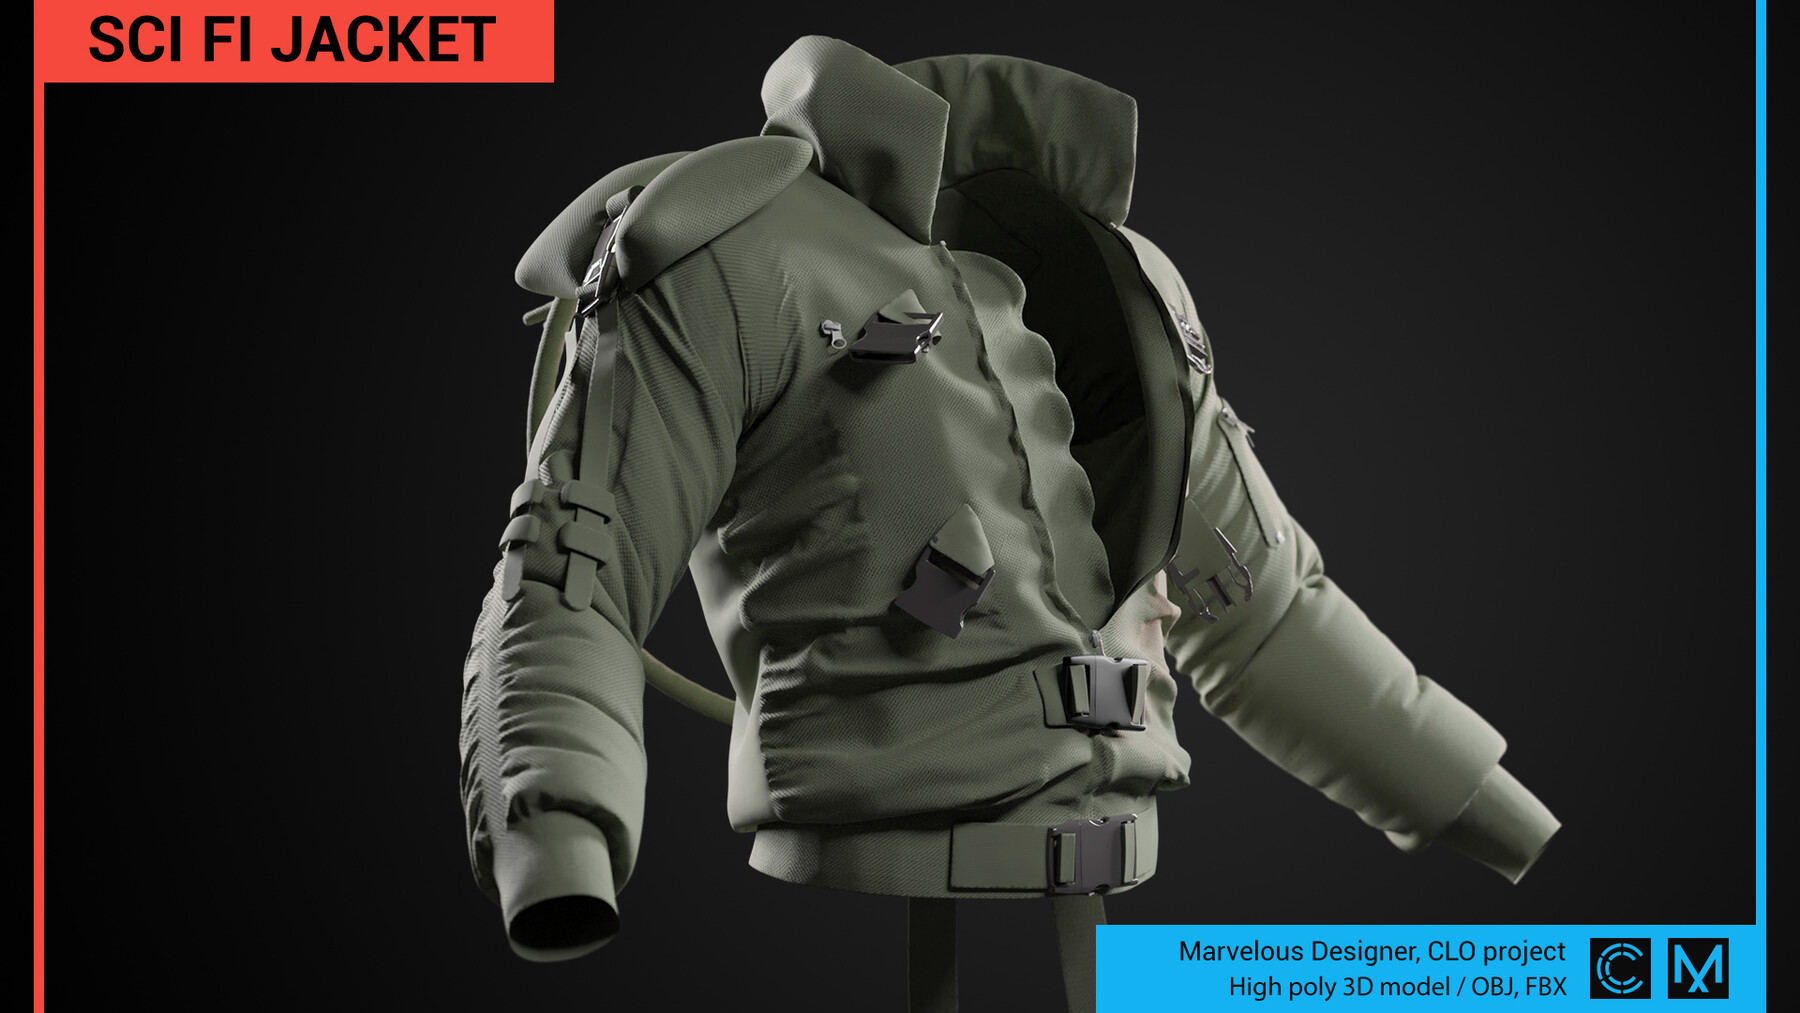 ArtStation - Sci Fi Jacket - Marvelous Designer, CLO project. | Resources